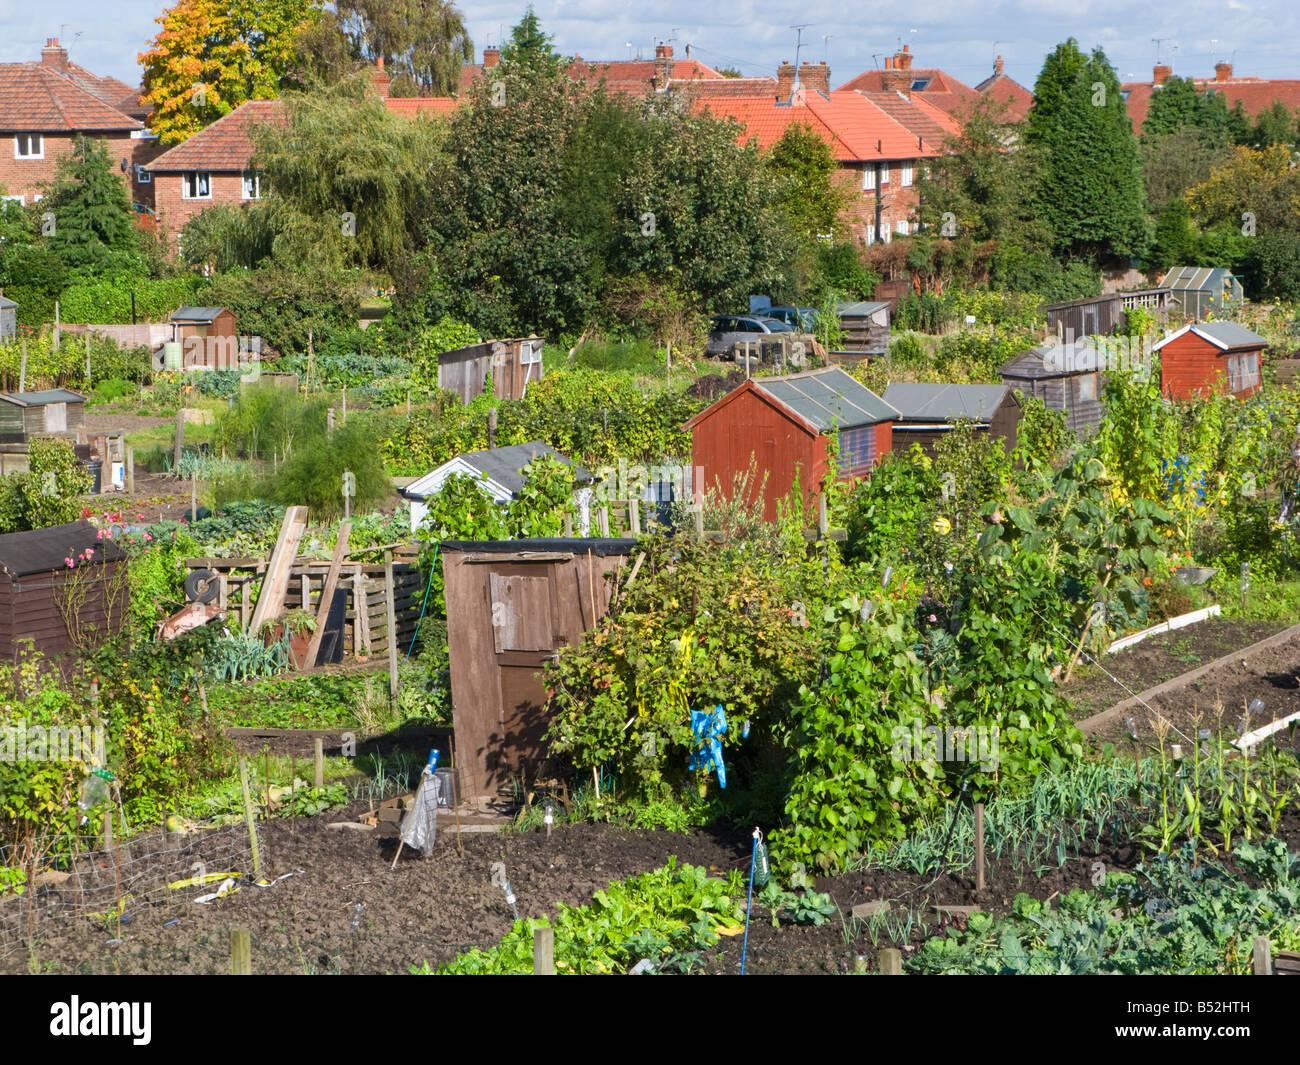 Kleingärten mit Schuppen, England, UK Stockfoto